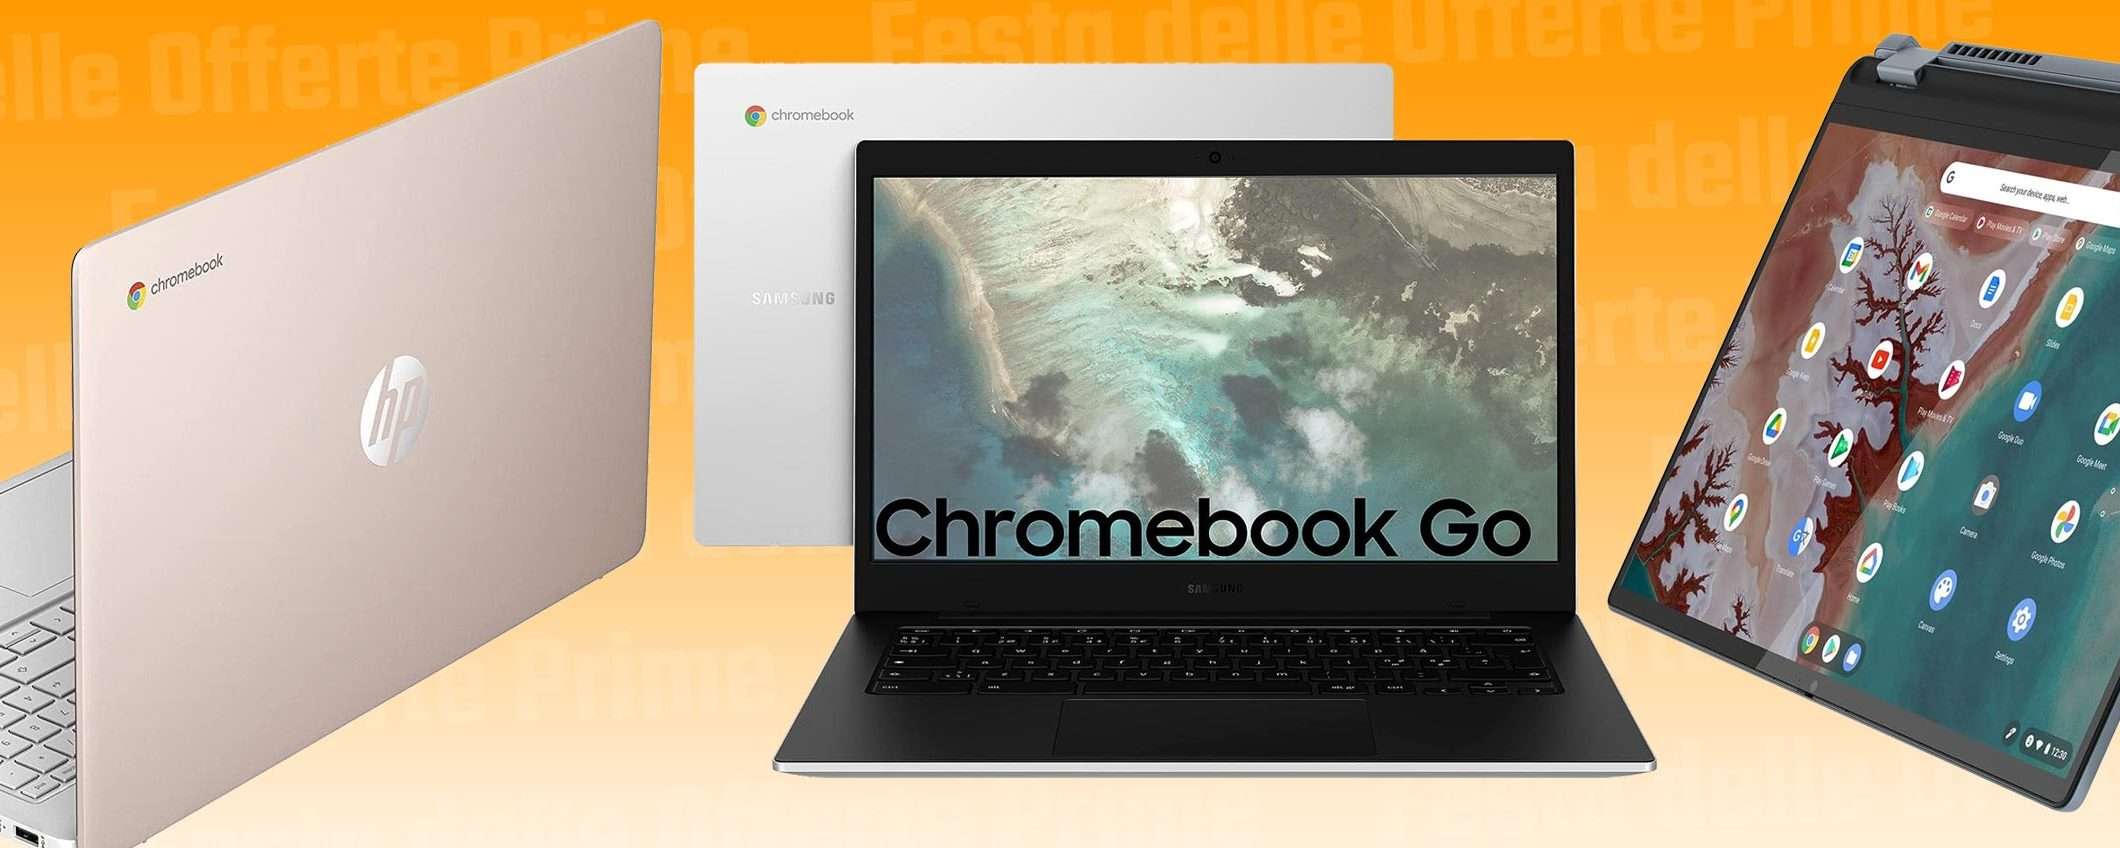 Festa delle Offerte Prime: tutti i Chromebook in offerta